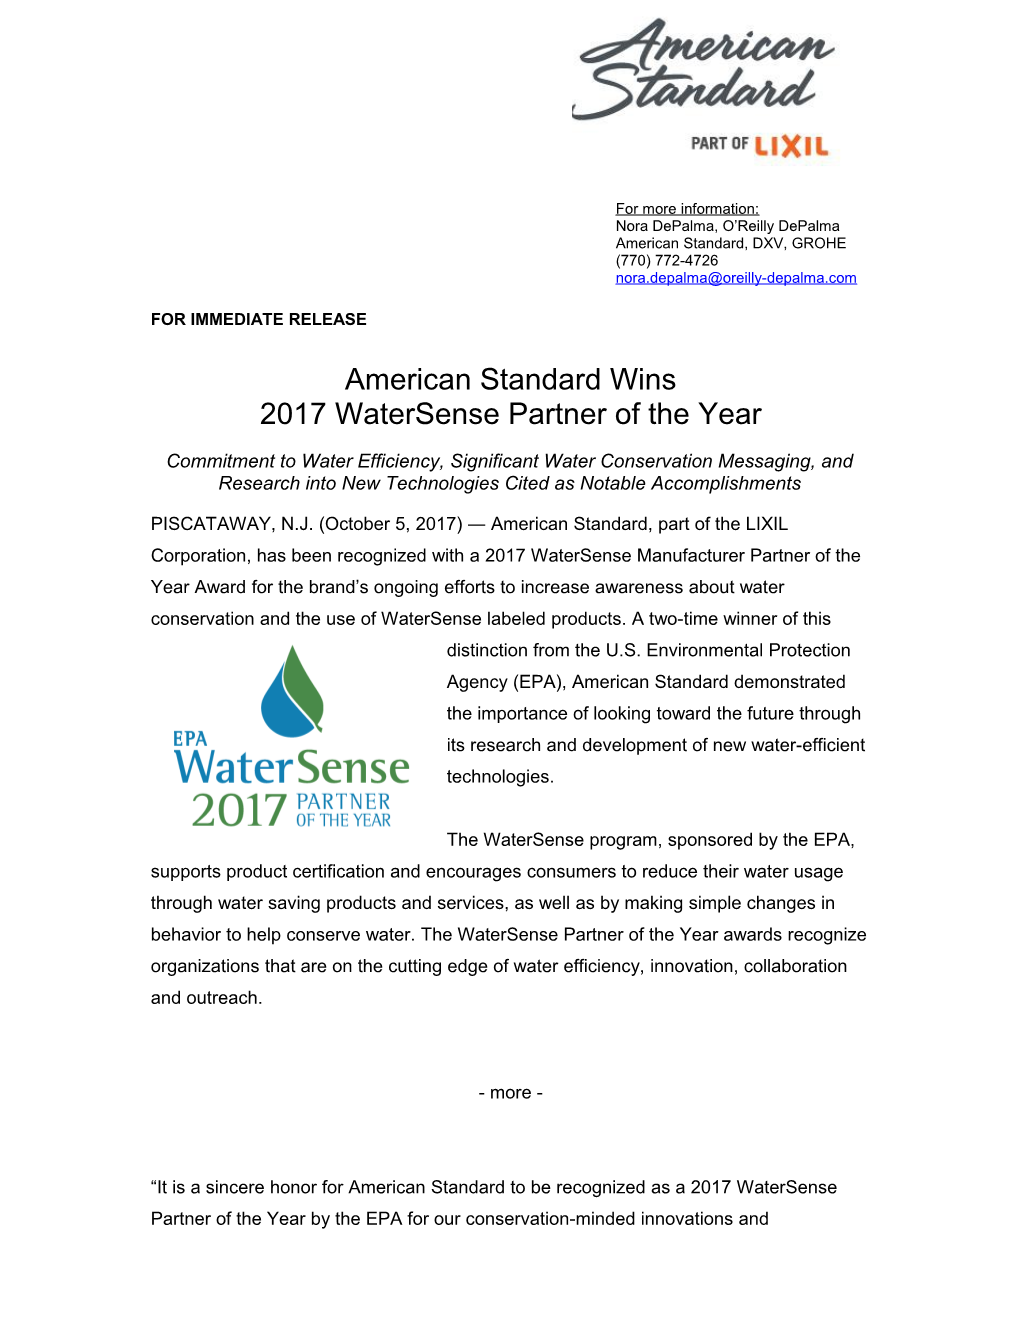 American Standard Wins 2017 Watersense Partner of the Year1-1-1